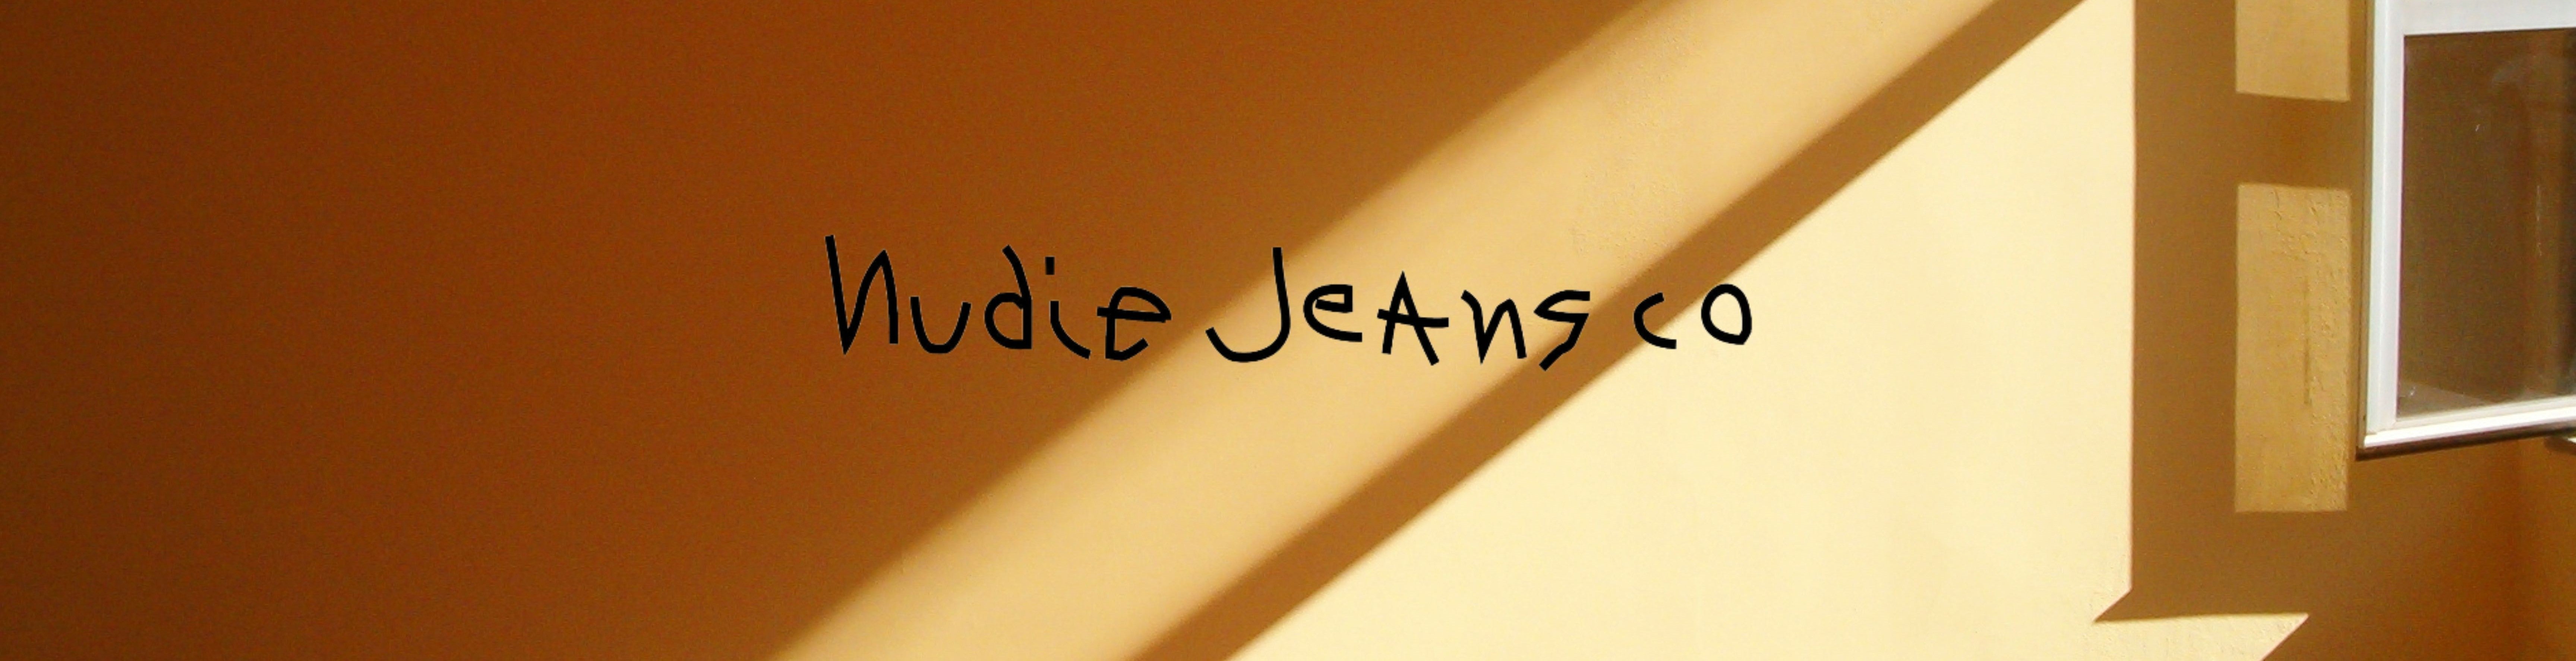 Nudie Jeans Slider Blurred Background